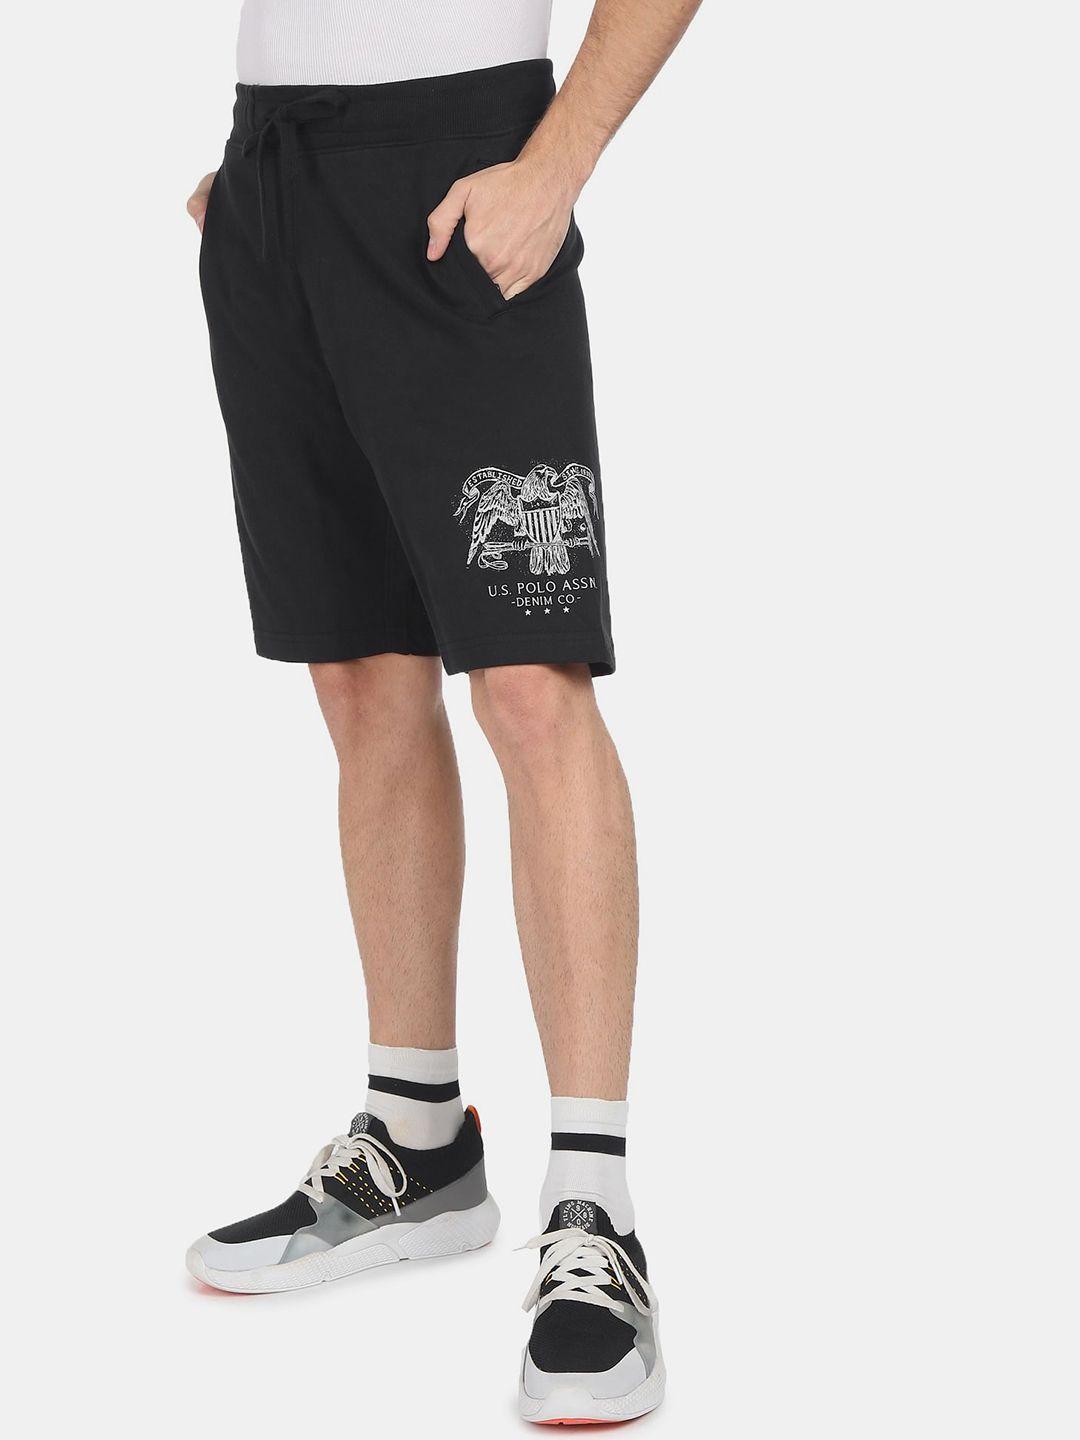 u s polo assn denim co men black & white printed slim fit shorts